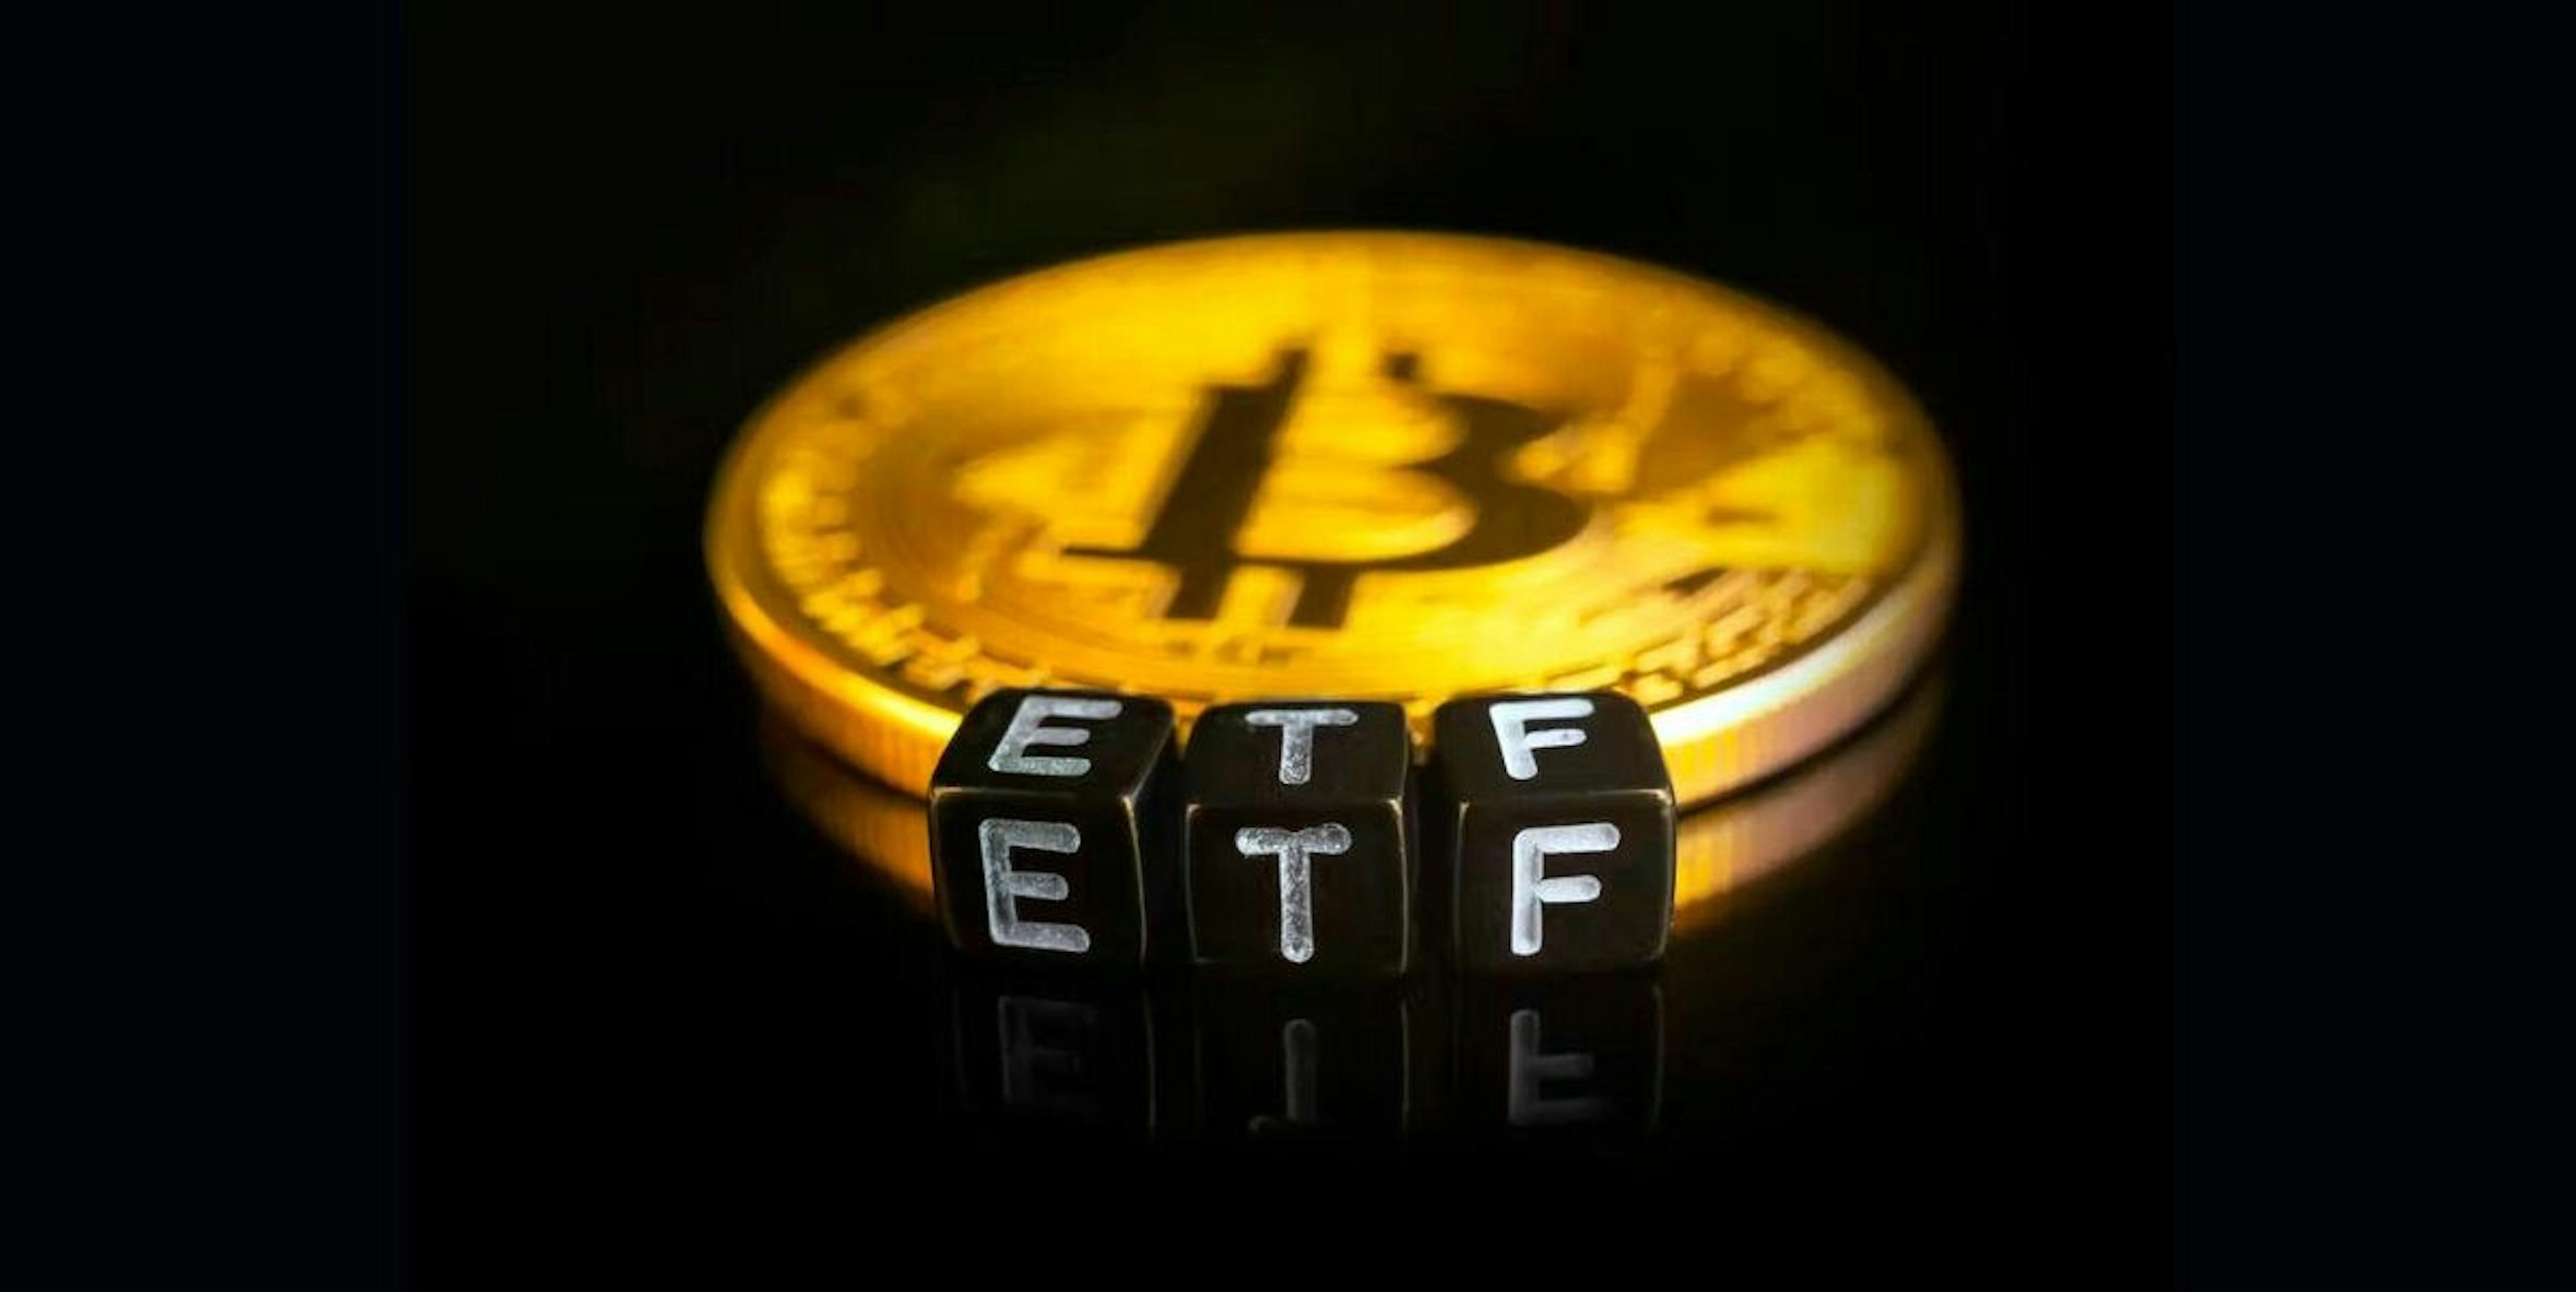 Bitcoin spot ETF tracks the price of Bitcoin